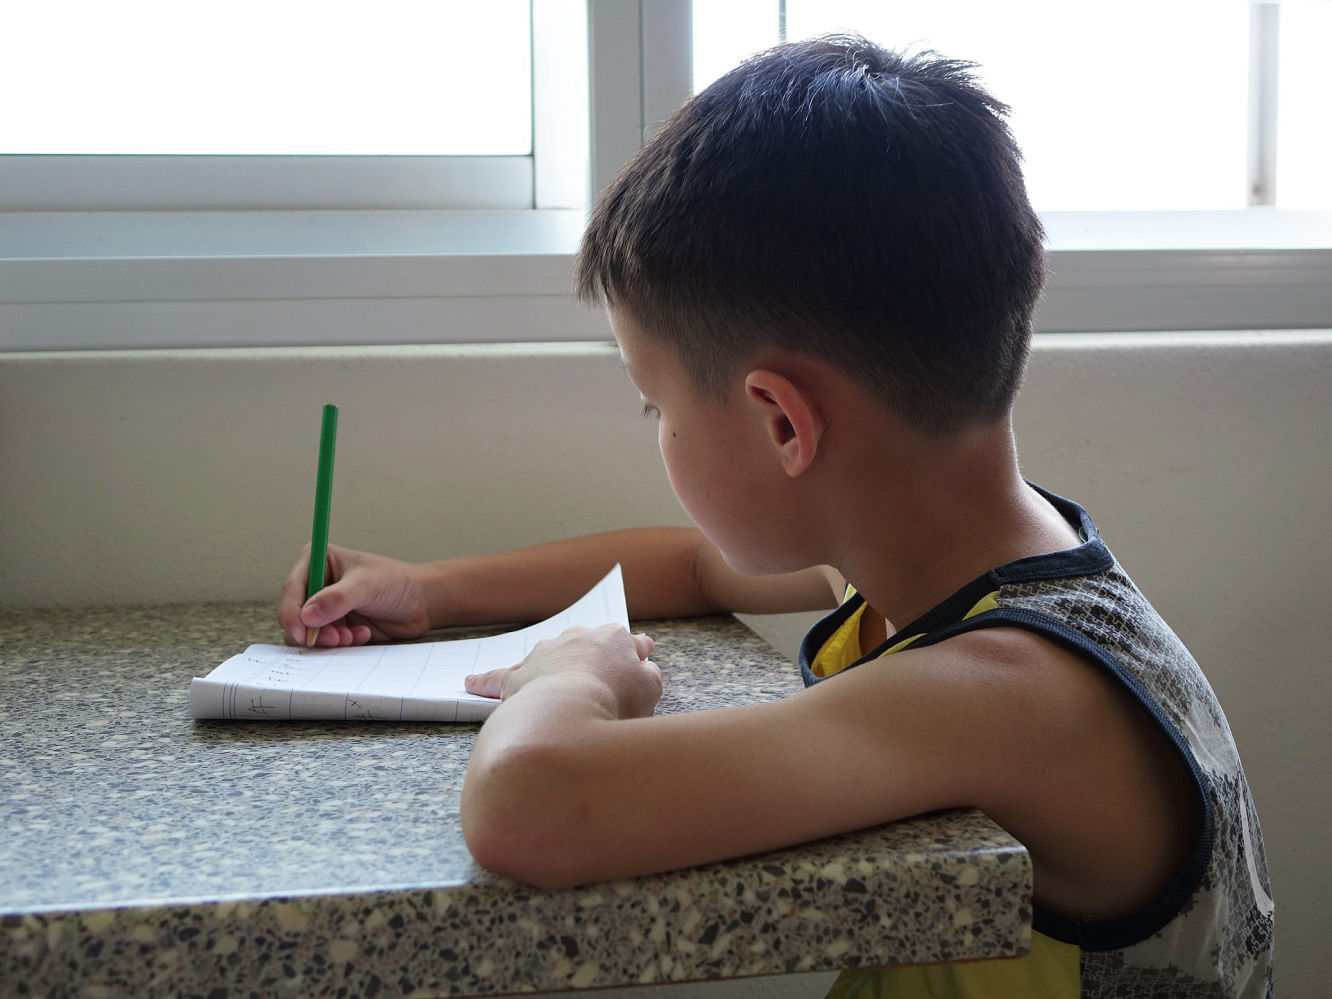 Boy writing at desk